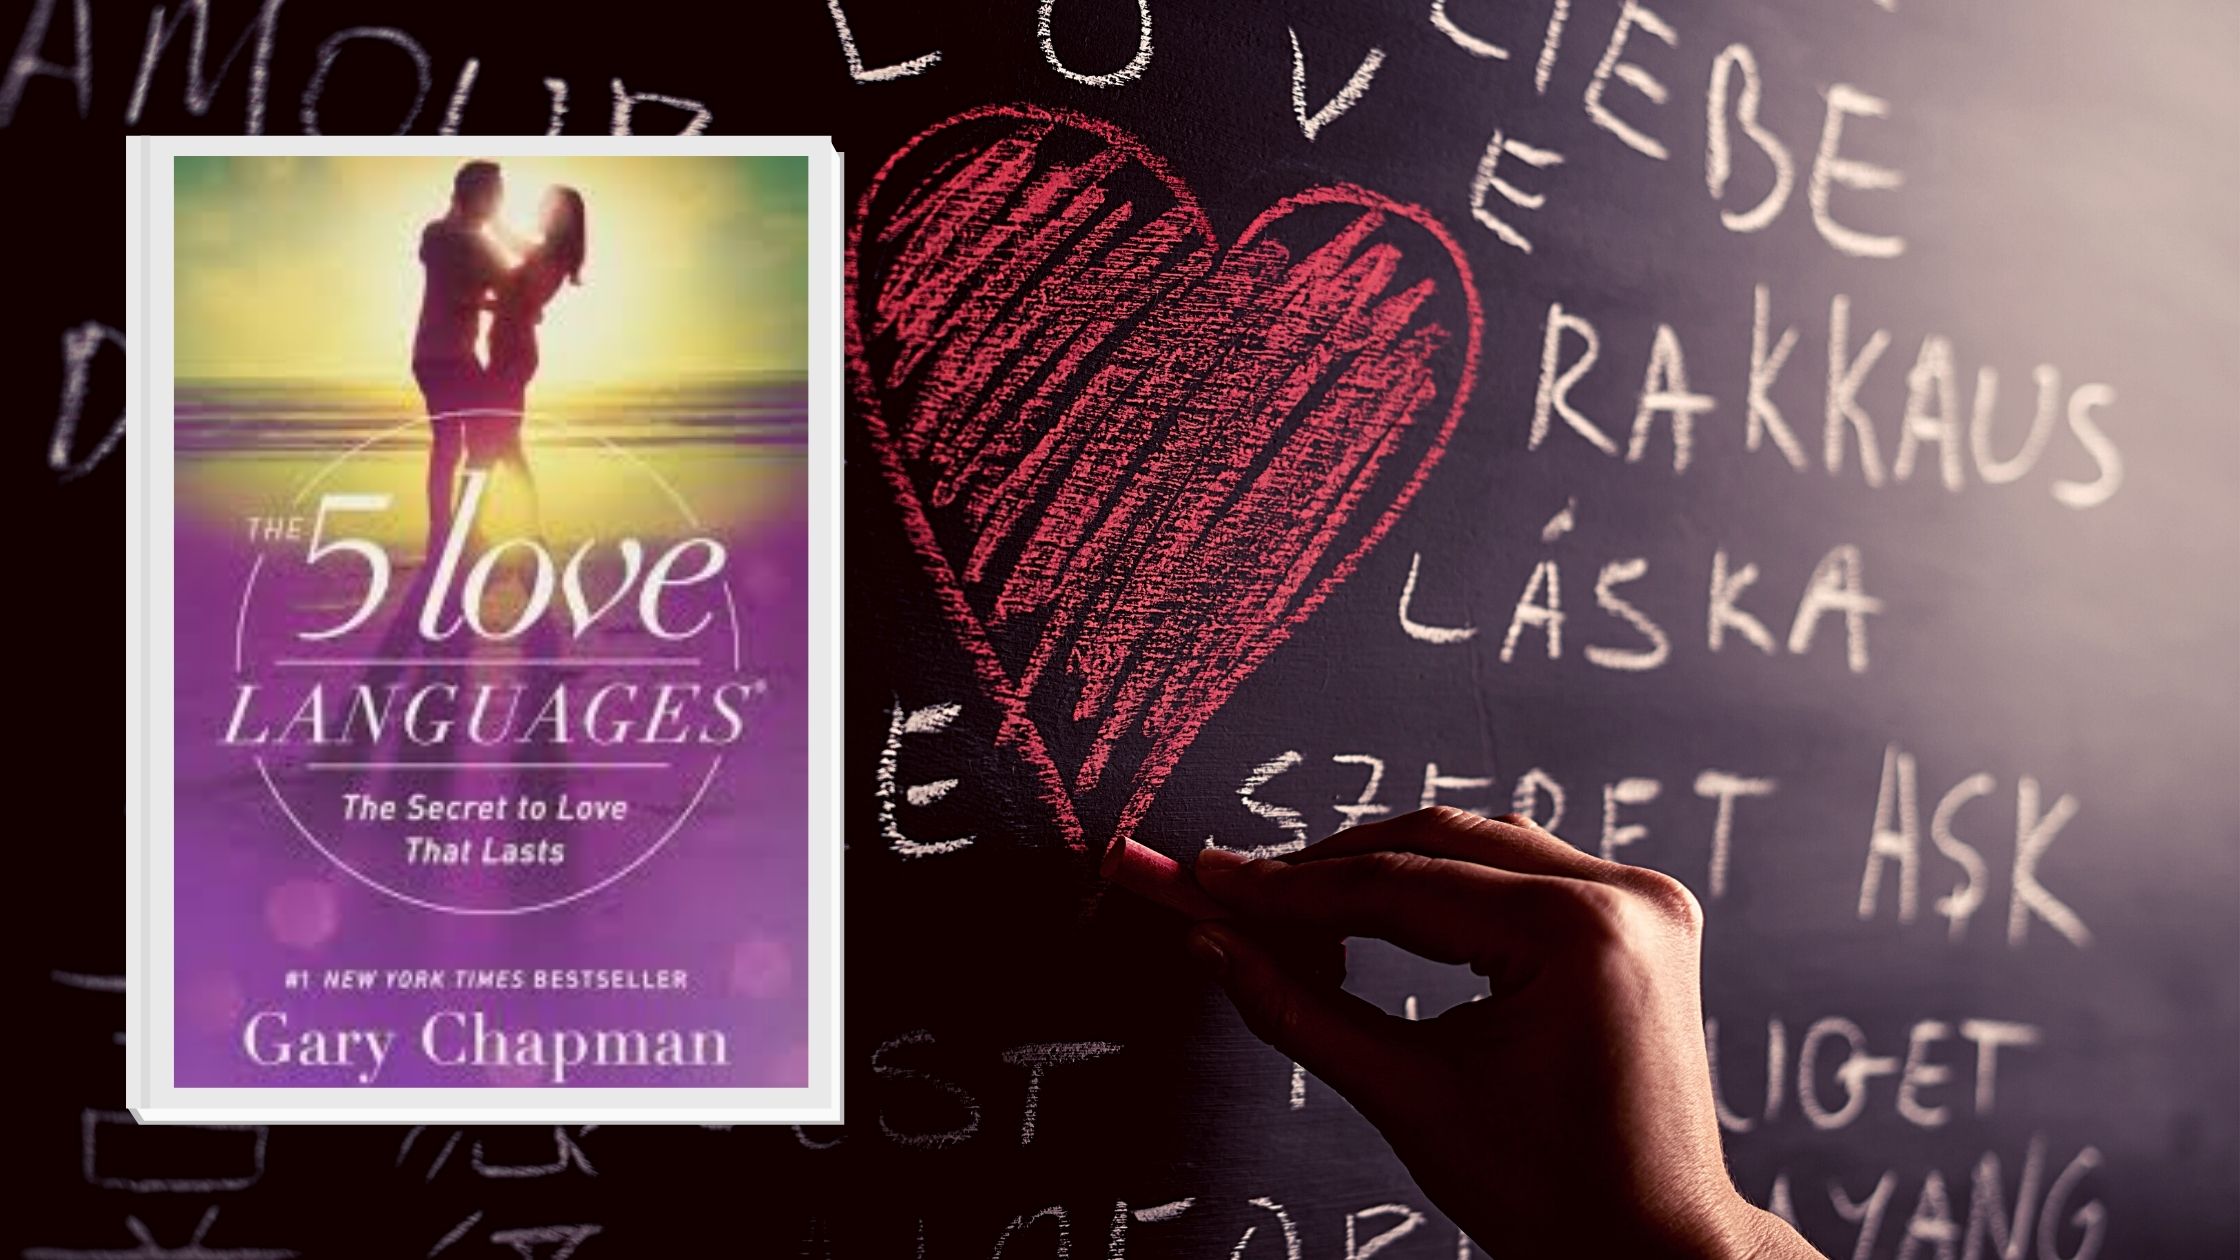 mindsplain-book-review-the-5-love-languages-the-secret-to-love-that